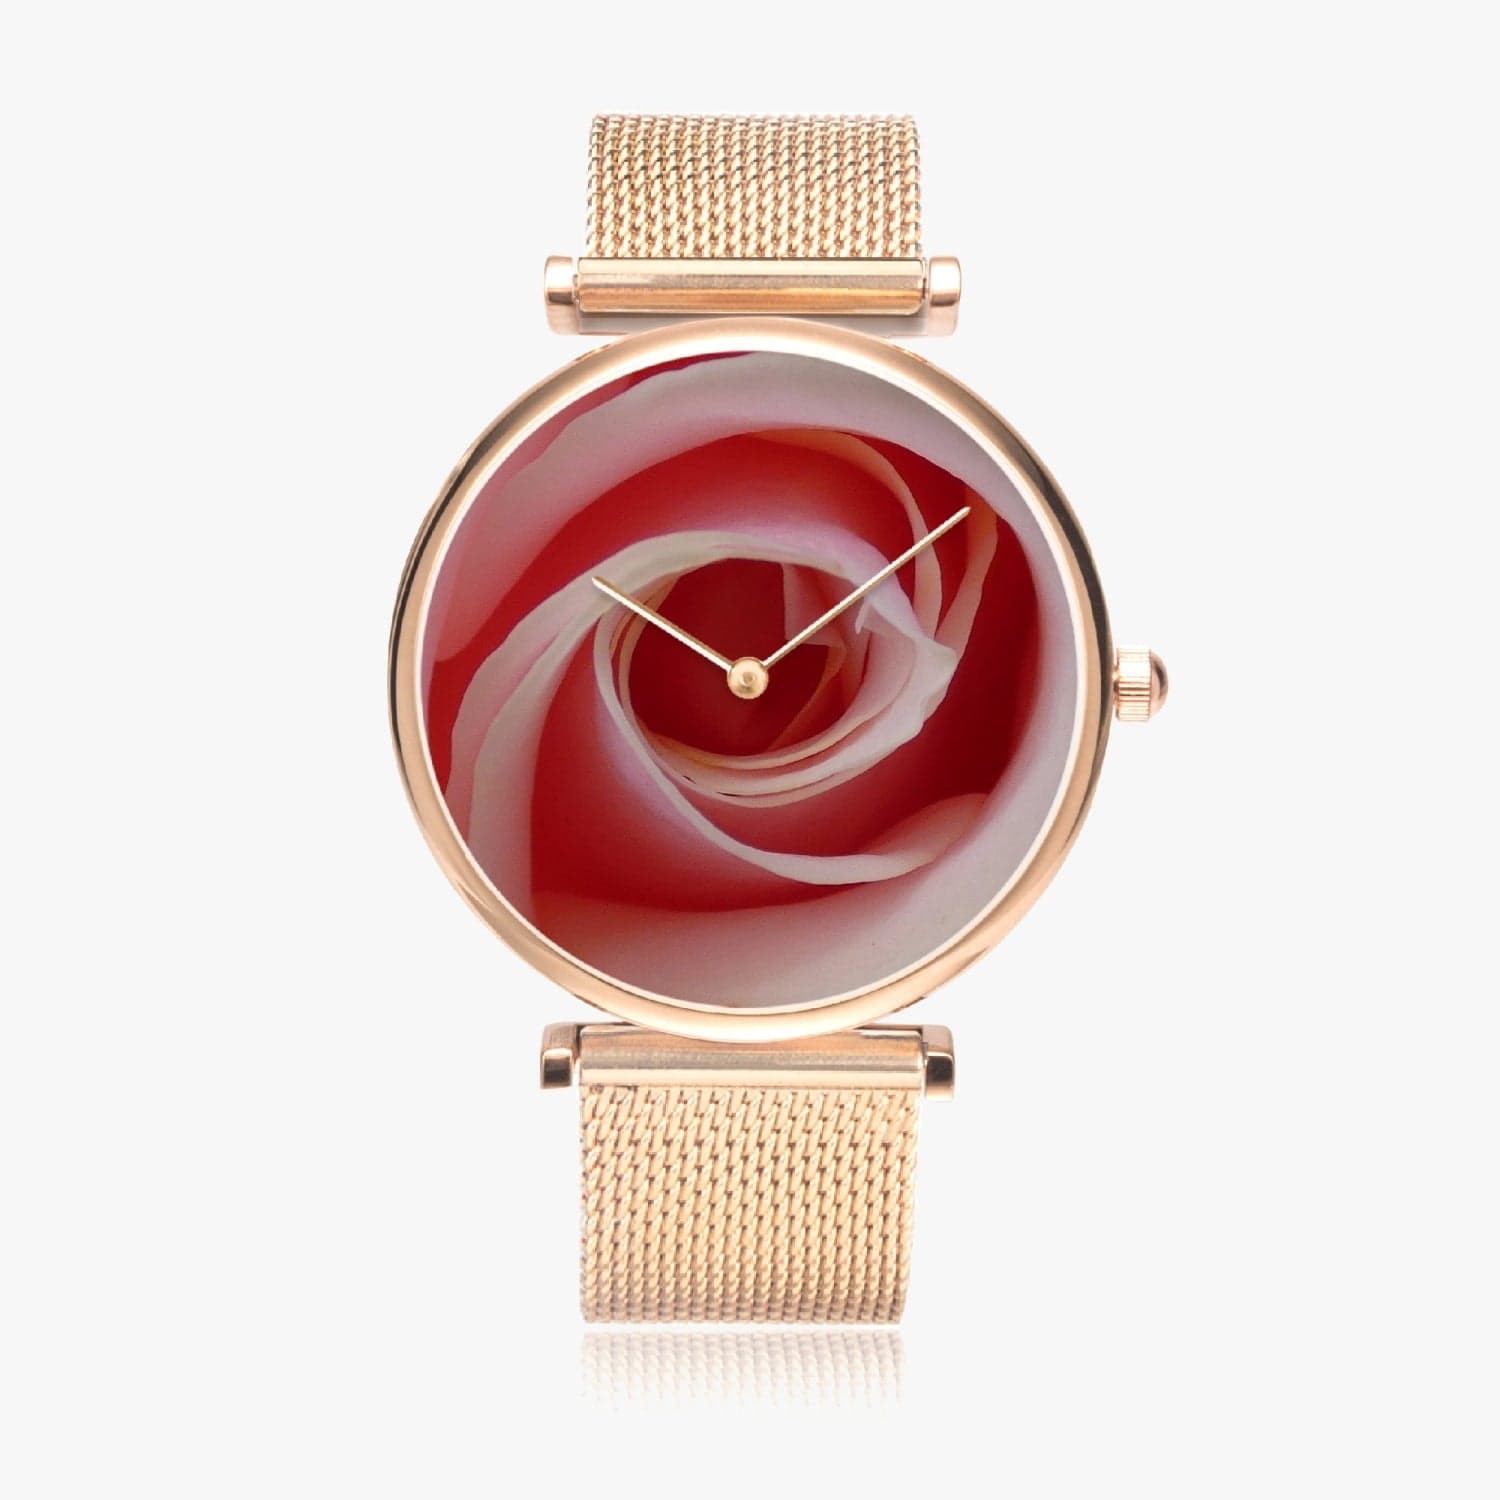 Pink rose, New Stylish Ultra-Thin Quartz Watch. Designer watch by Sensus Studio Design